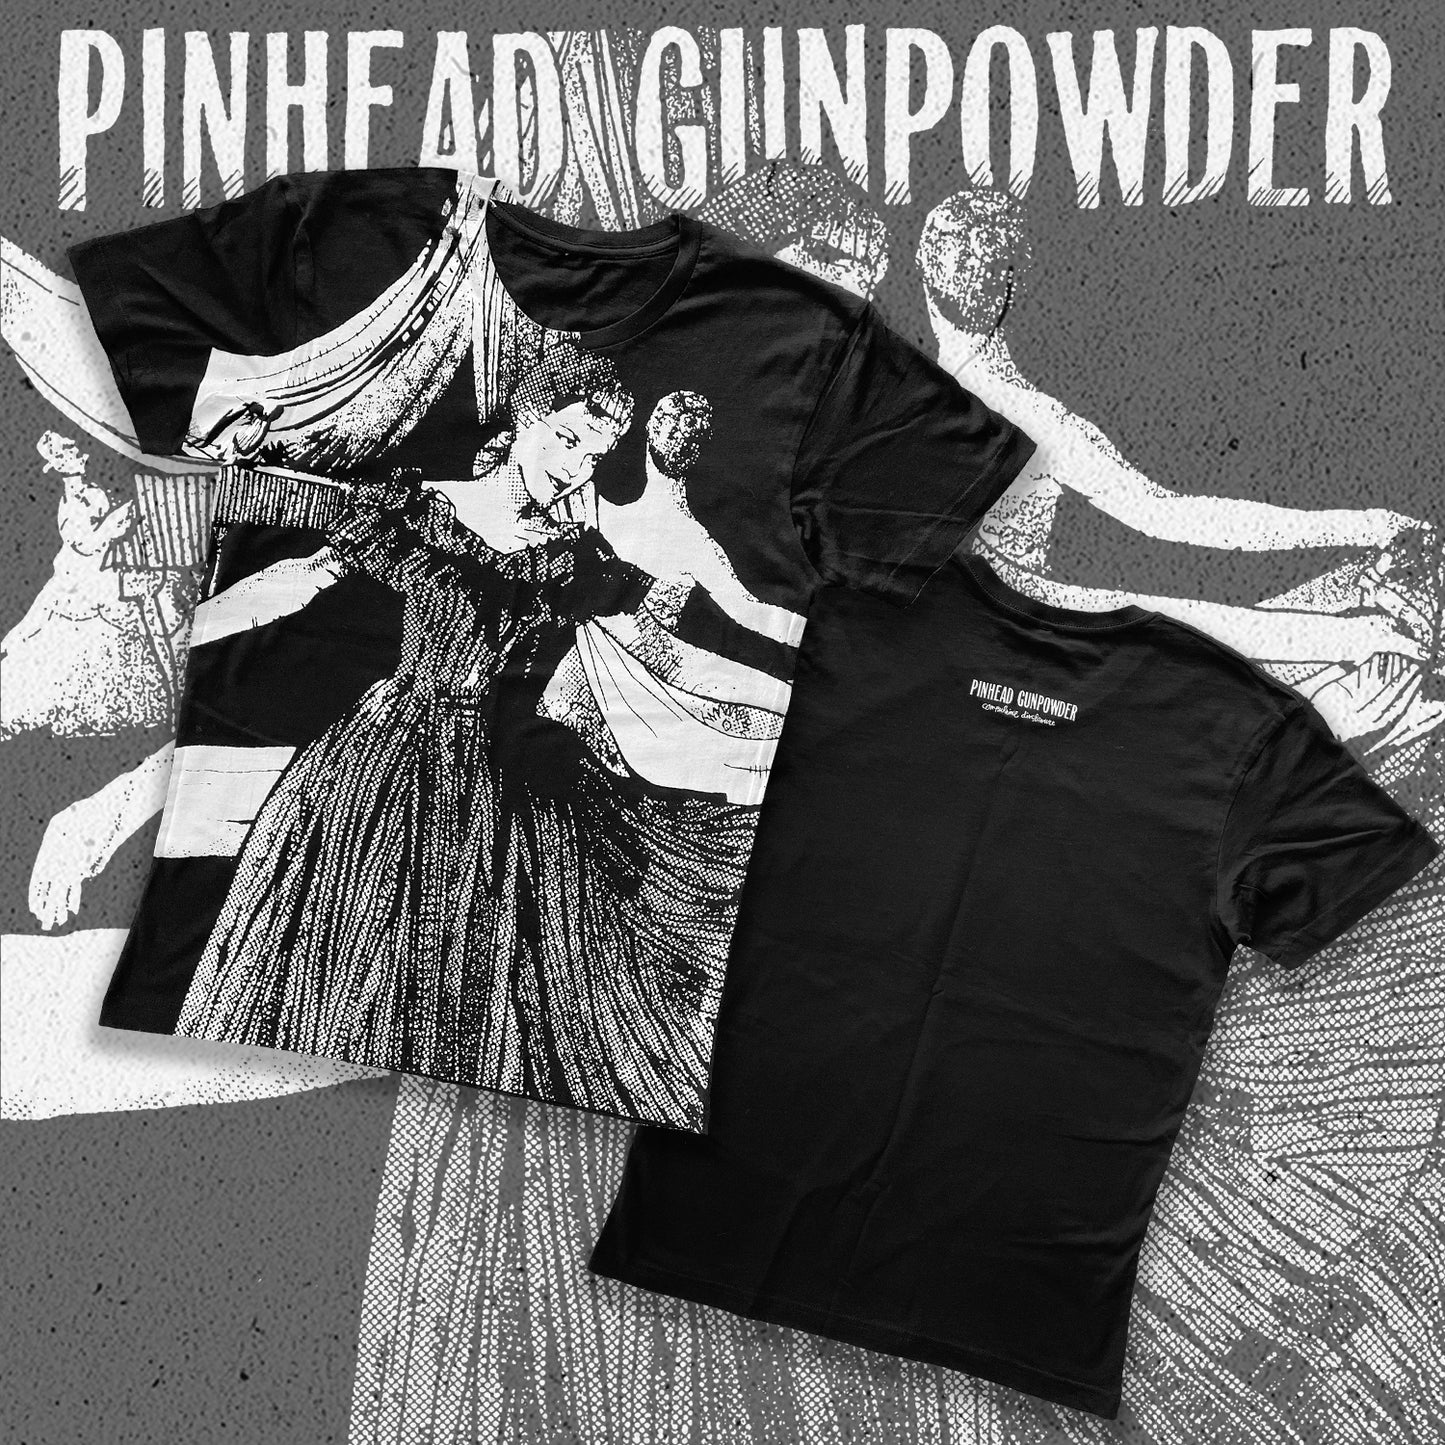 Pinhead Gunpowder "Compulsive Disclosure" Shirt